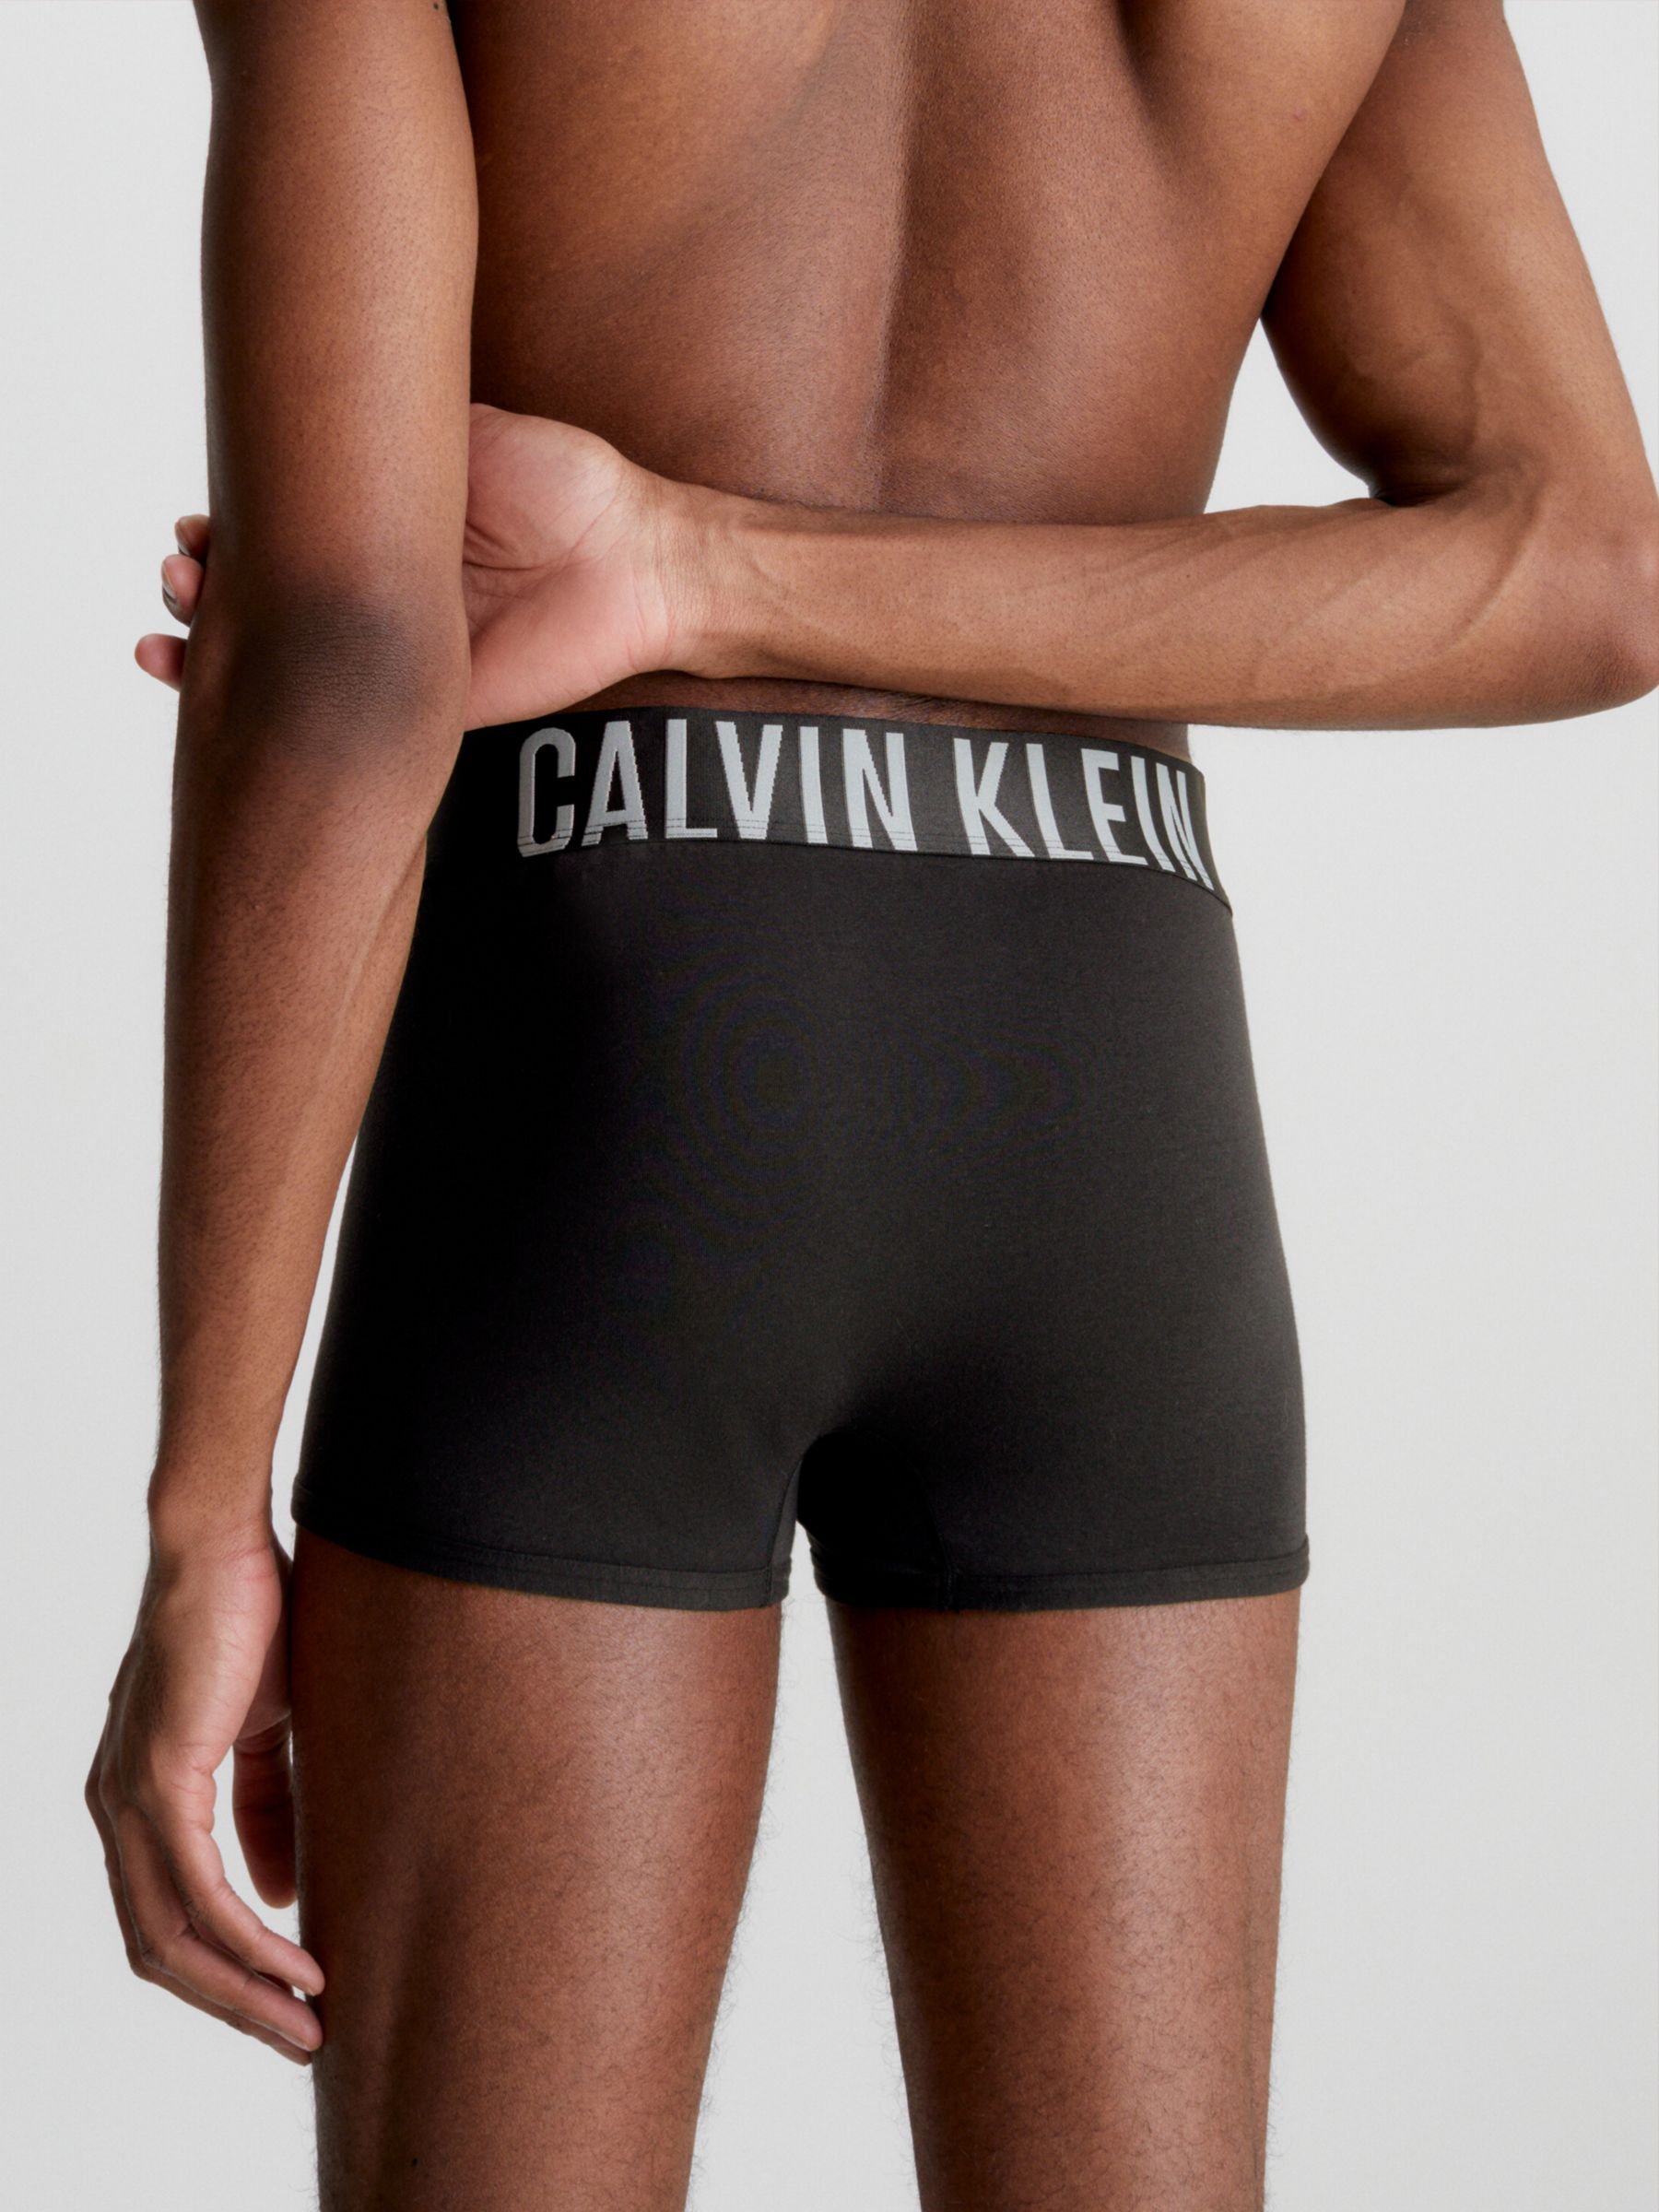 Calvin Klein Intense Power Cotton Stretch Trunks, Pack of 2, Black, S